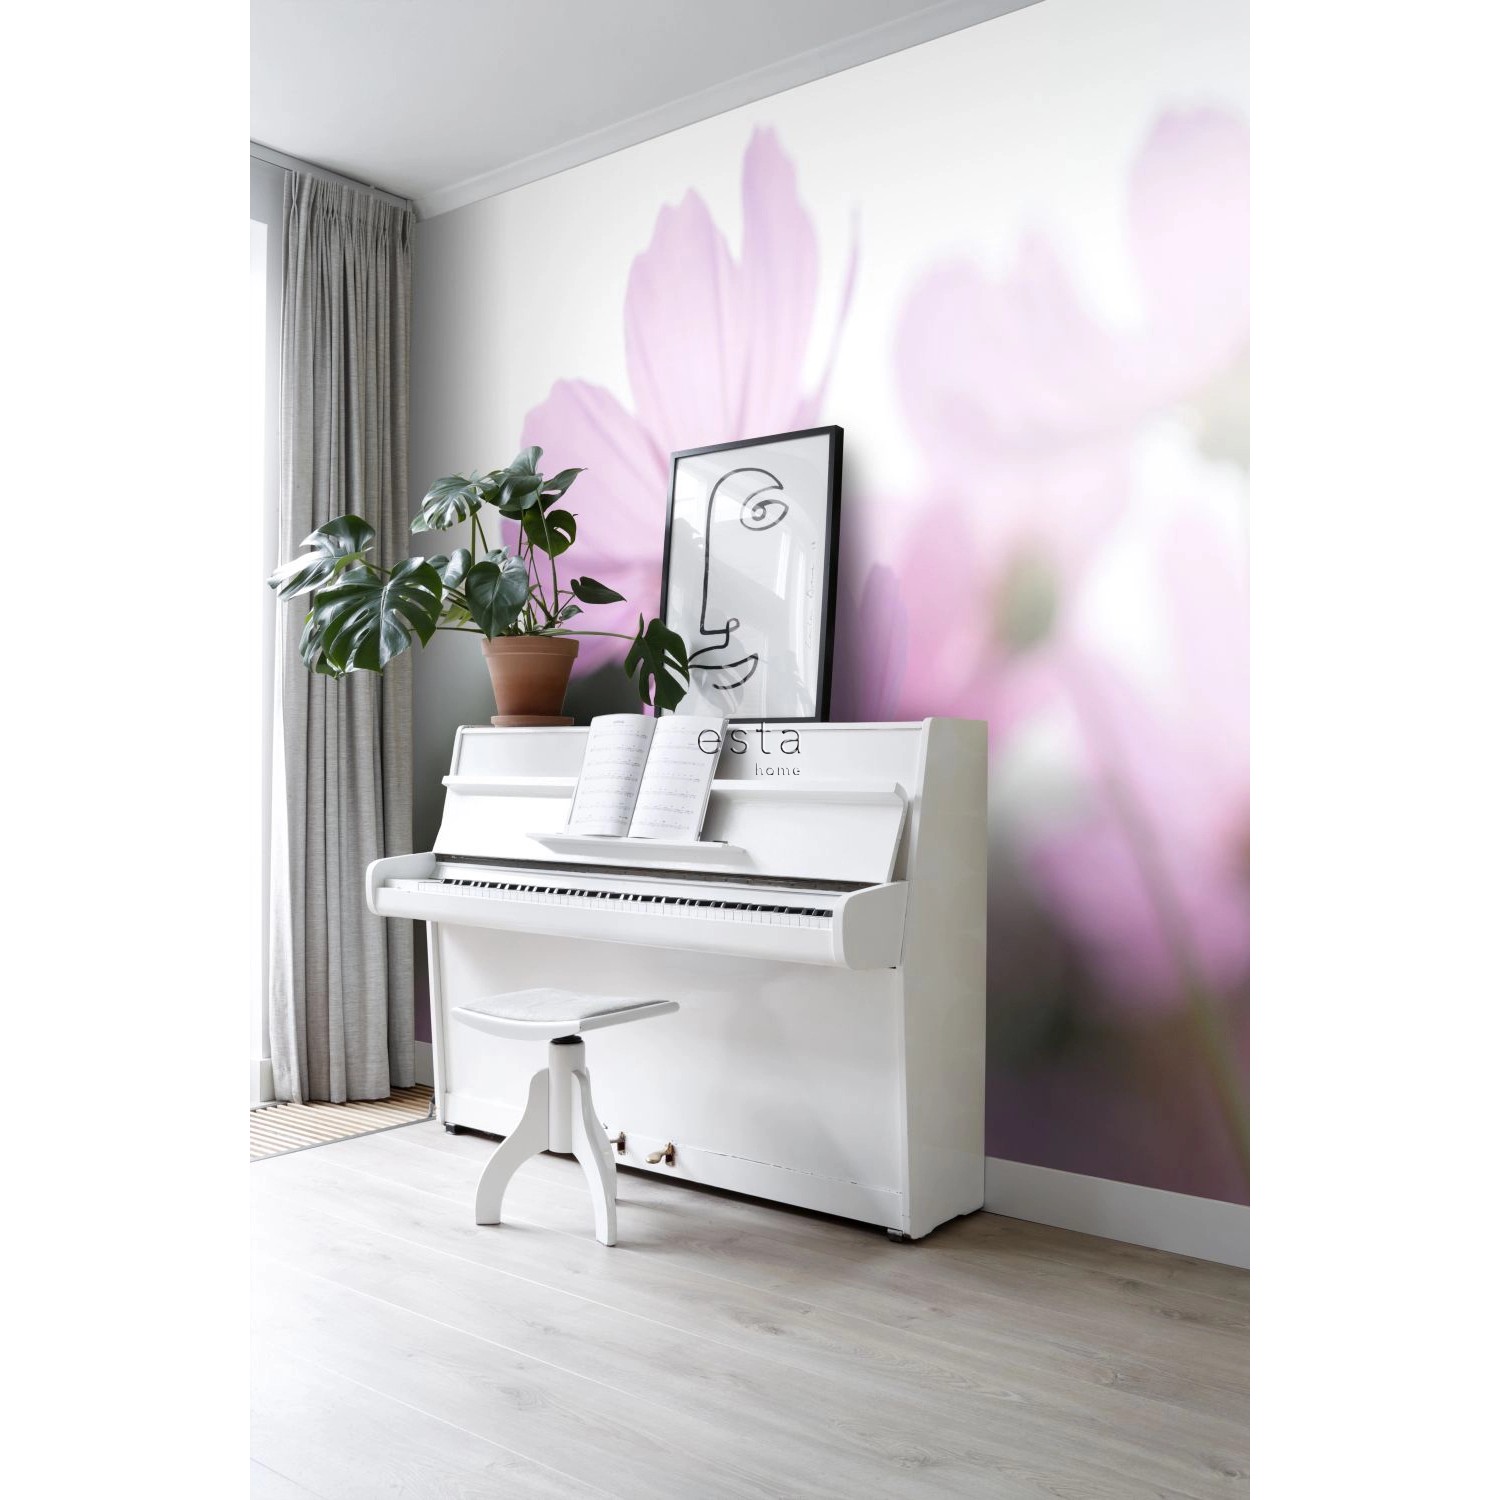 ESTAhome Fototapete Feldblumen Rosa 418,5 cm x 279 m 158009 günstig online kaufen